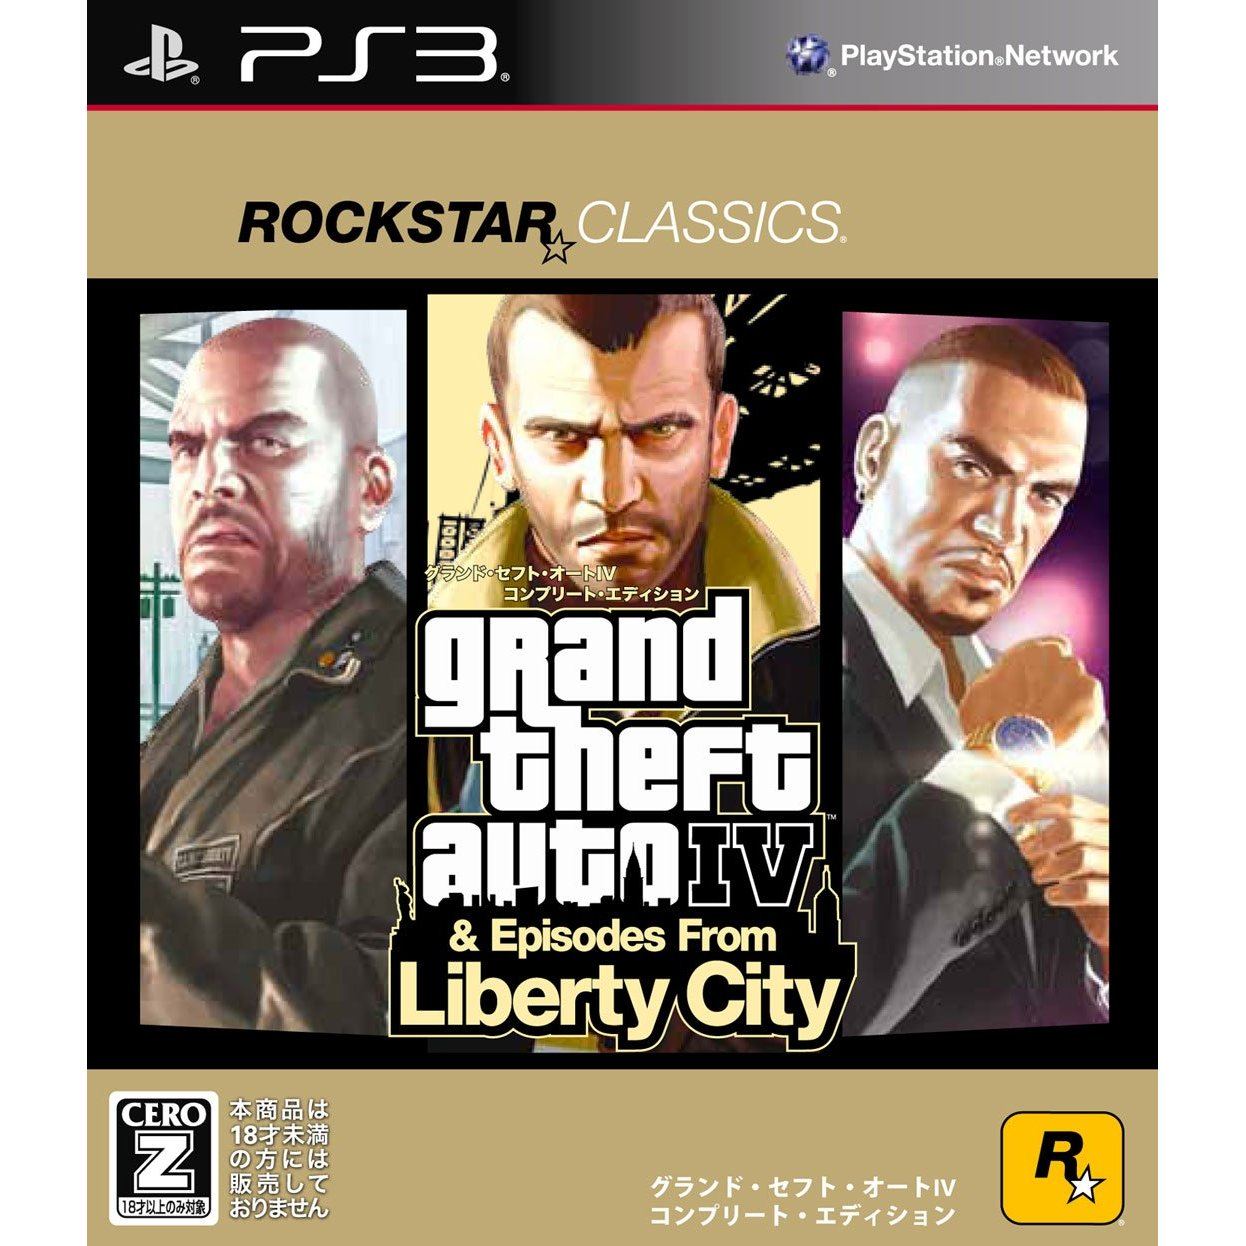 Grand Theft Auto IV Remastered : r/GTA